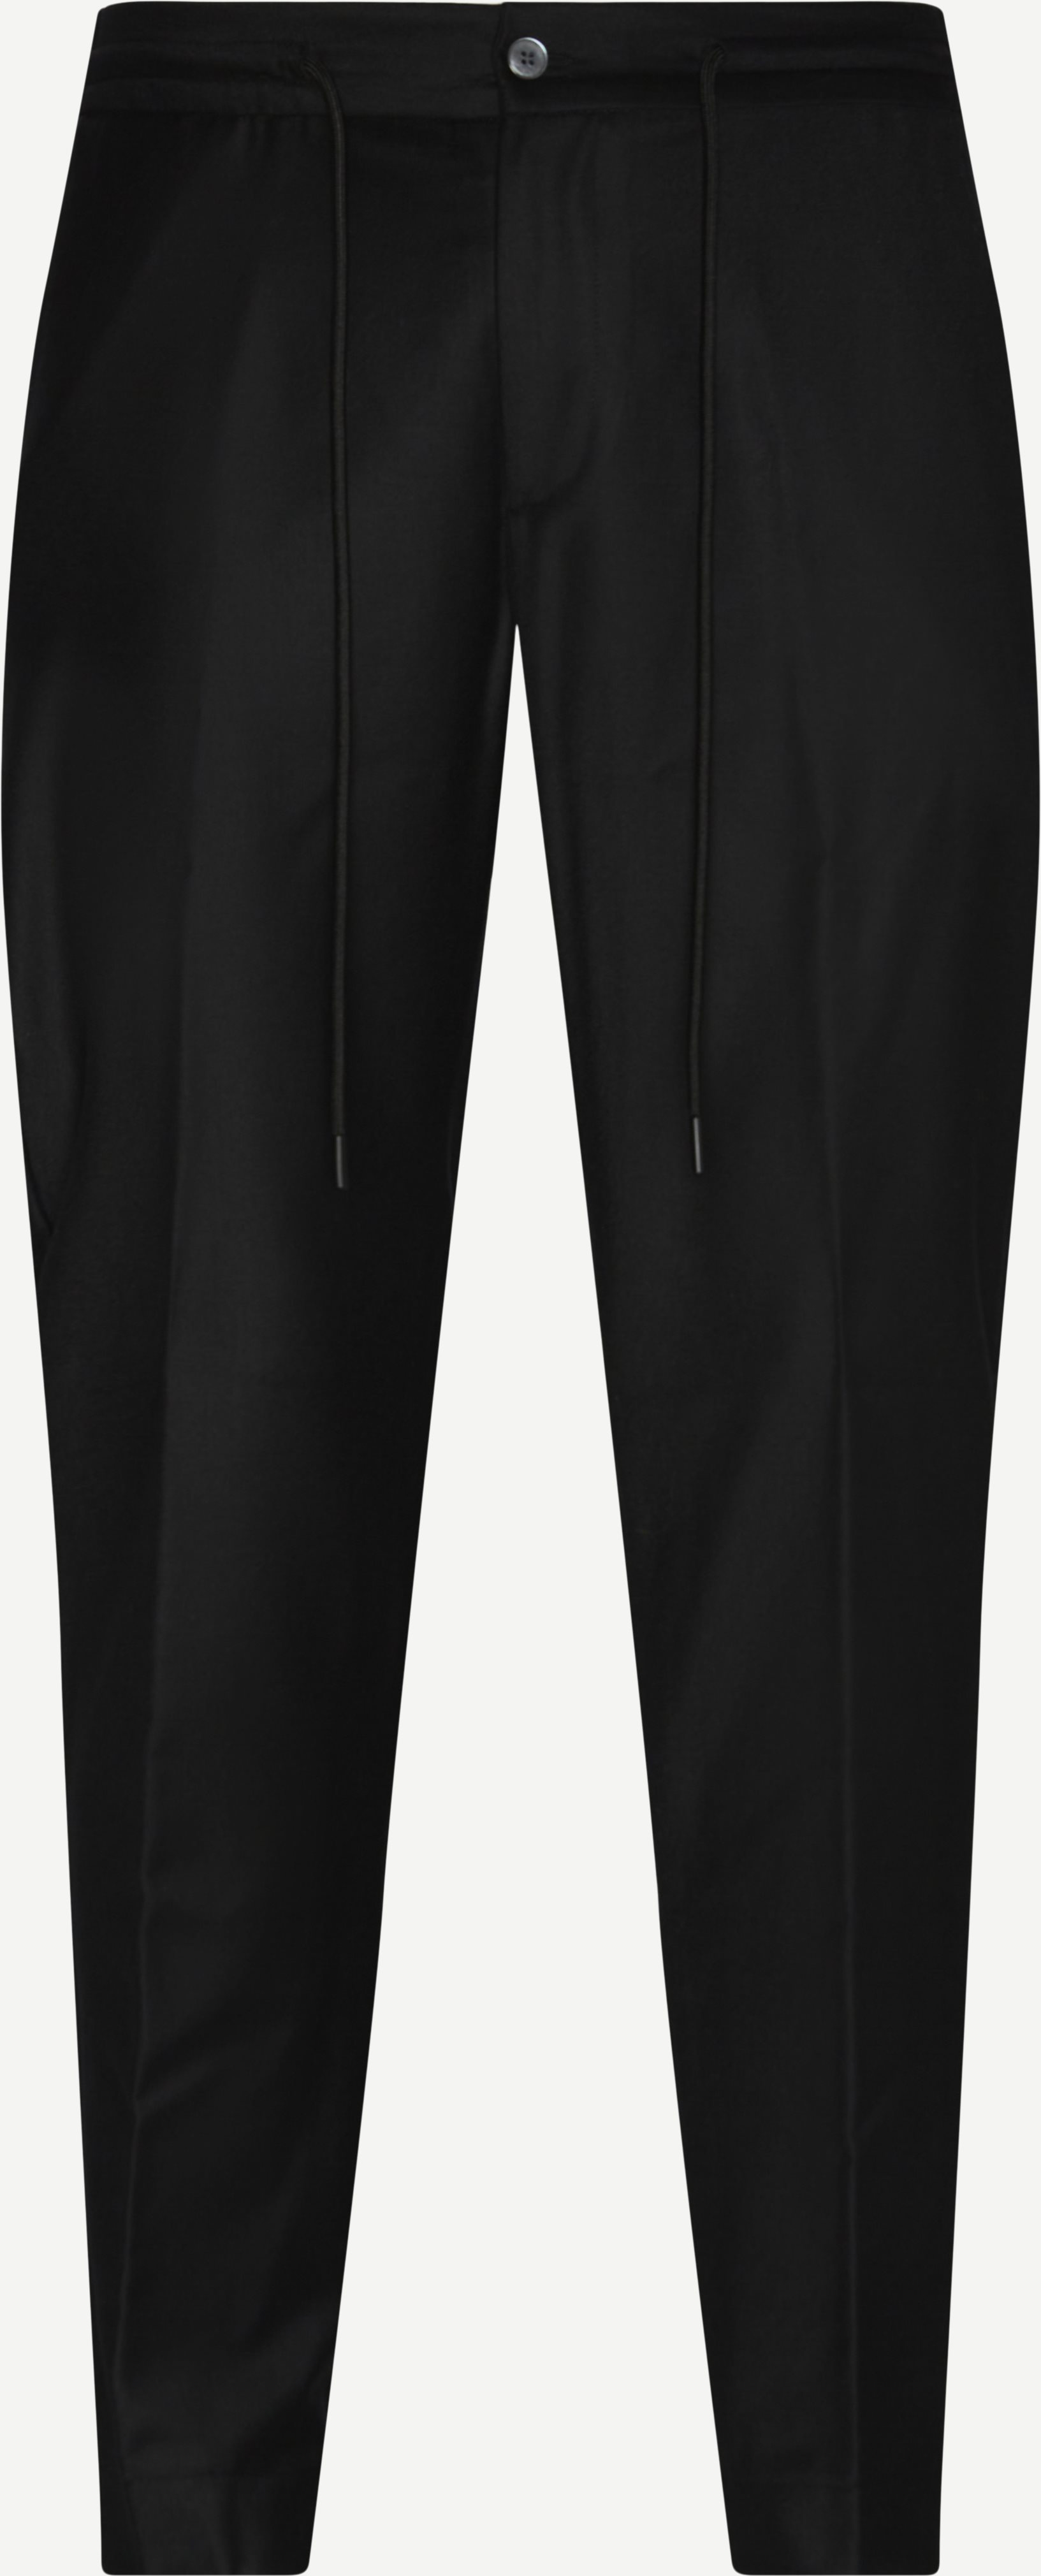 Pantalone Zero Gravity Bukser - Bukser - Slim fit - Sort